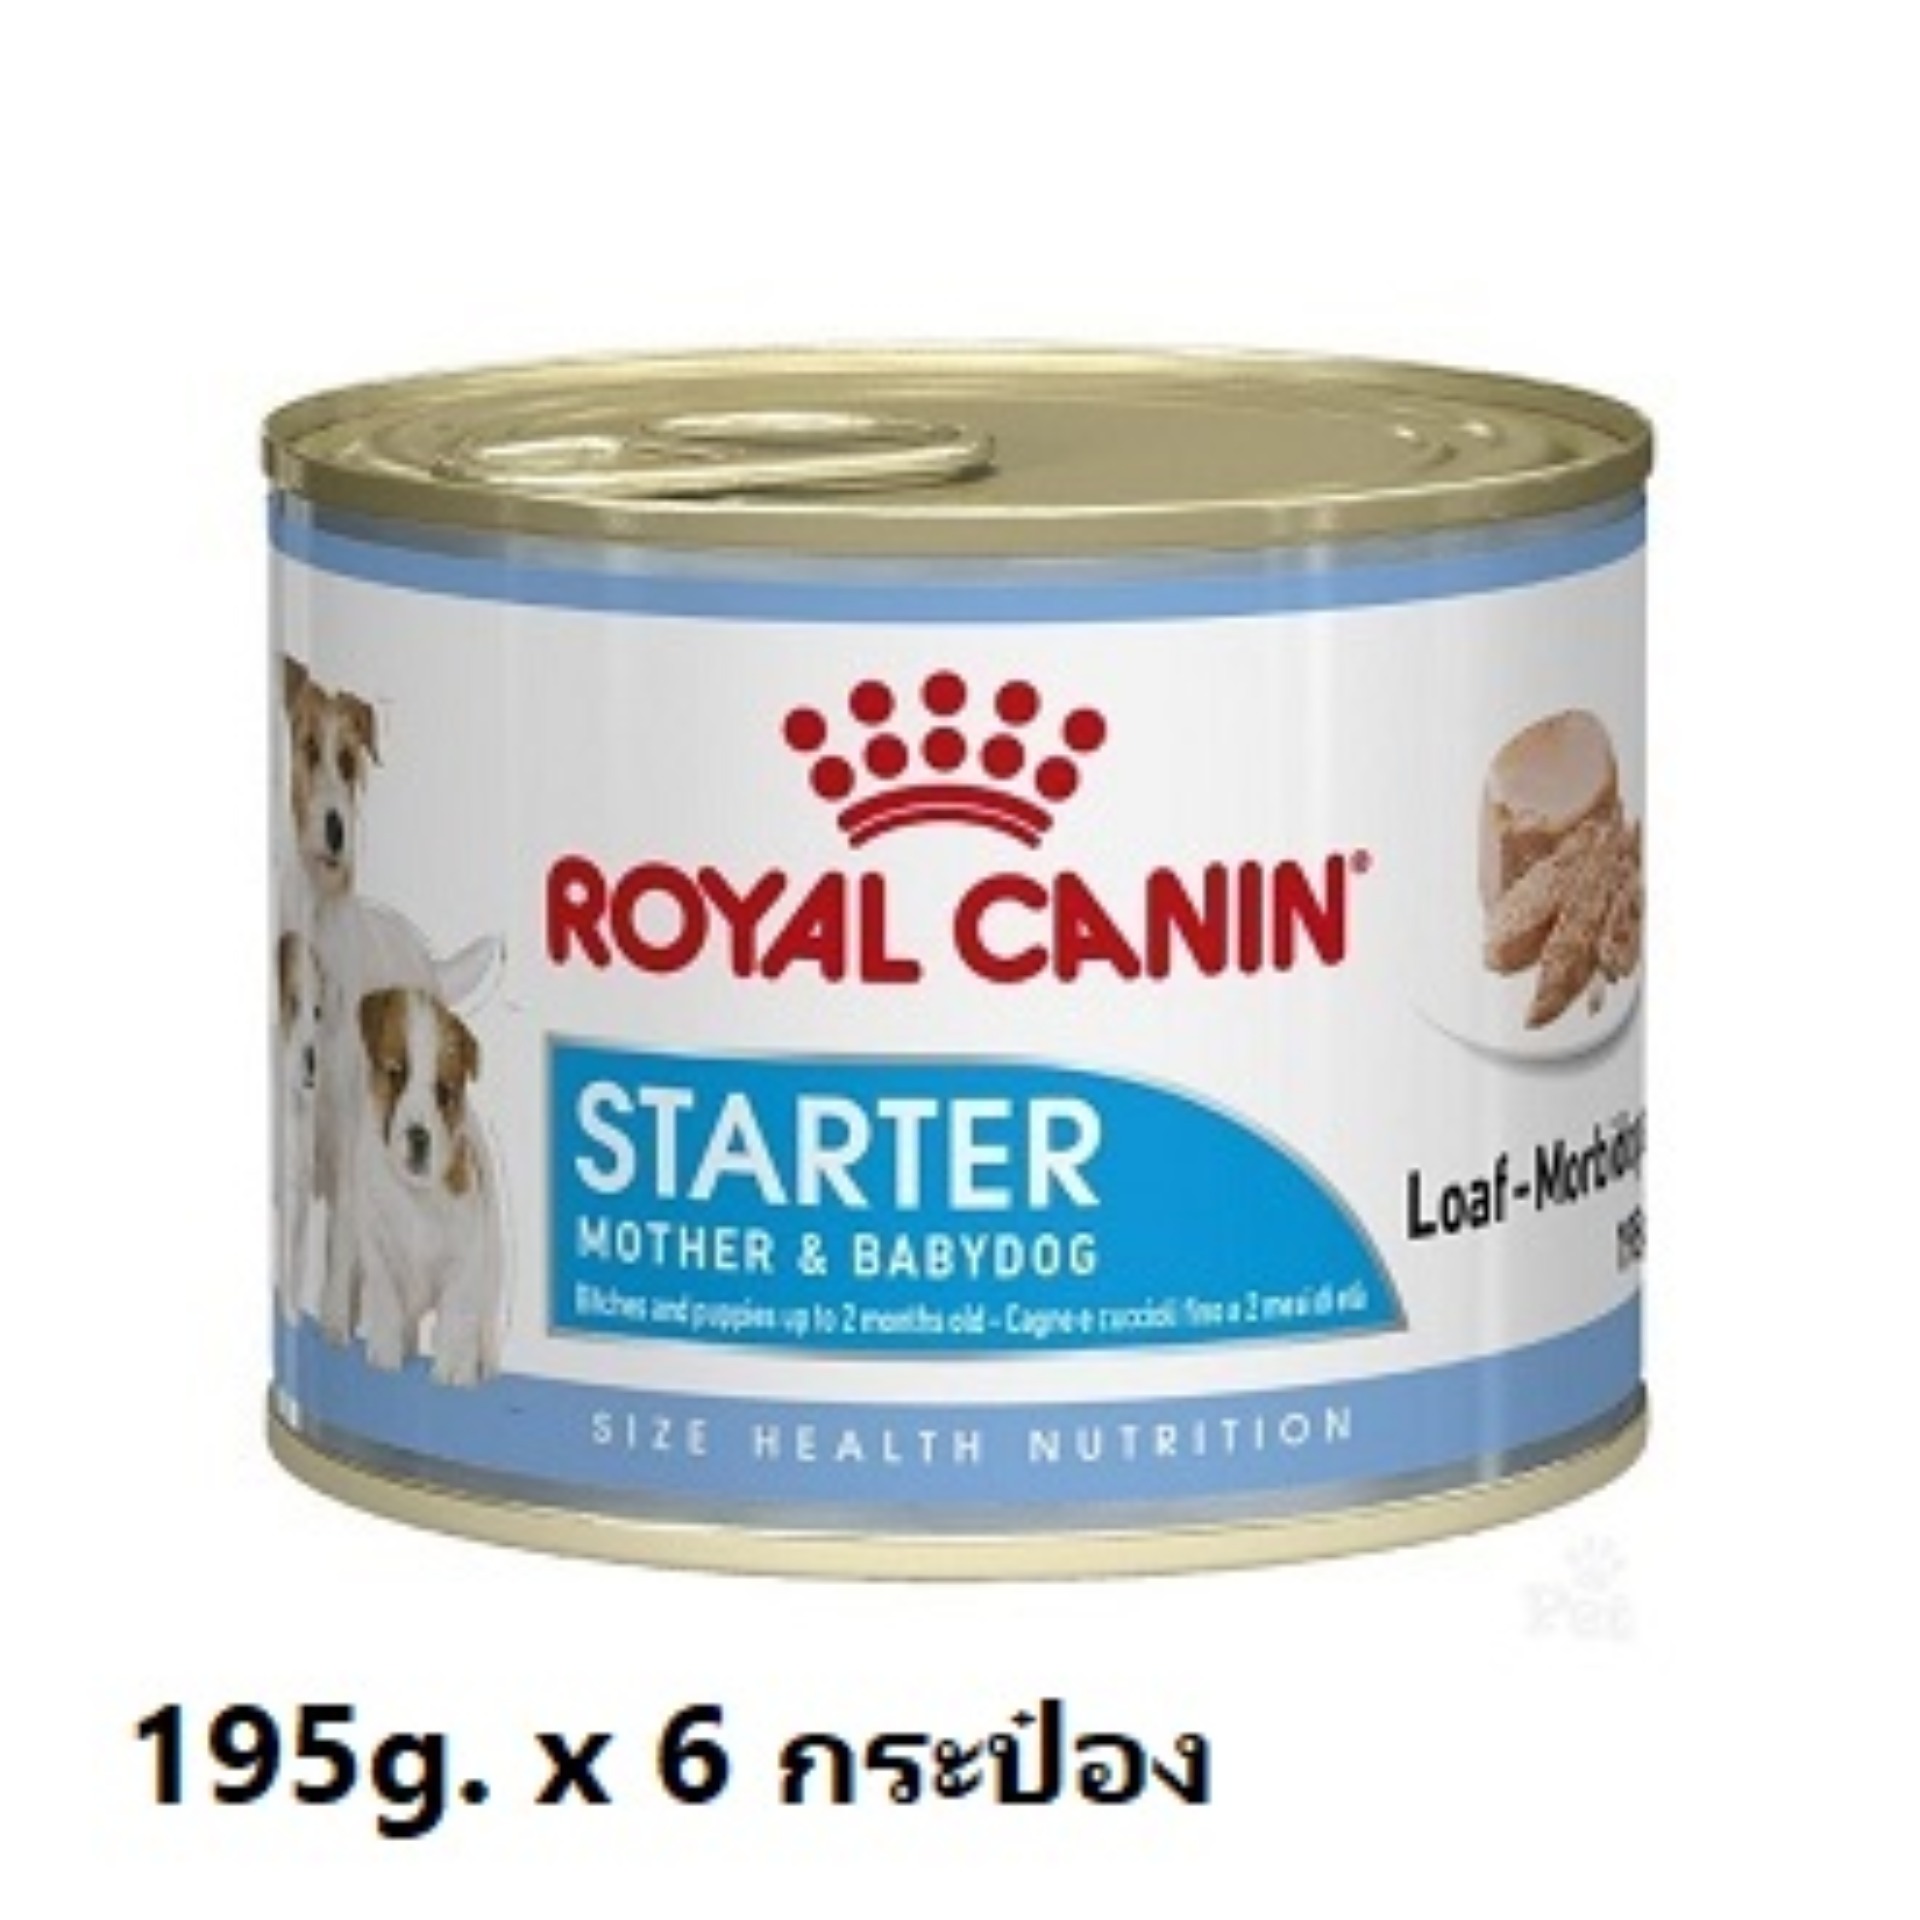 Royal Canin Starter Mousse Mother & Babydog  อาหารแม่สุนัข ลูกสุนัข กระป๋อง 195g x 6 cans